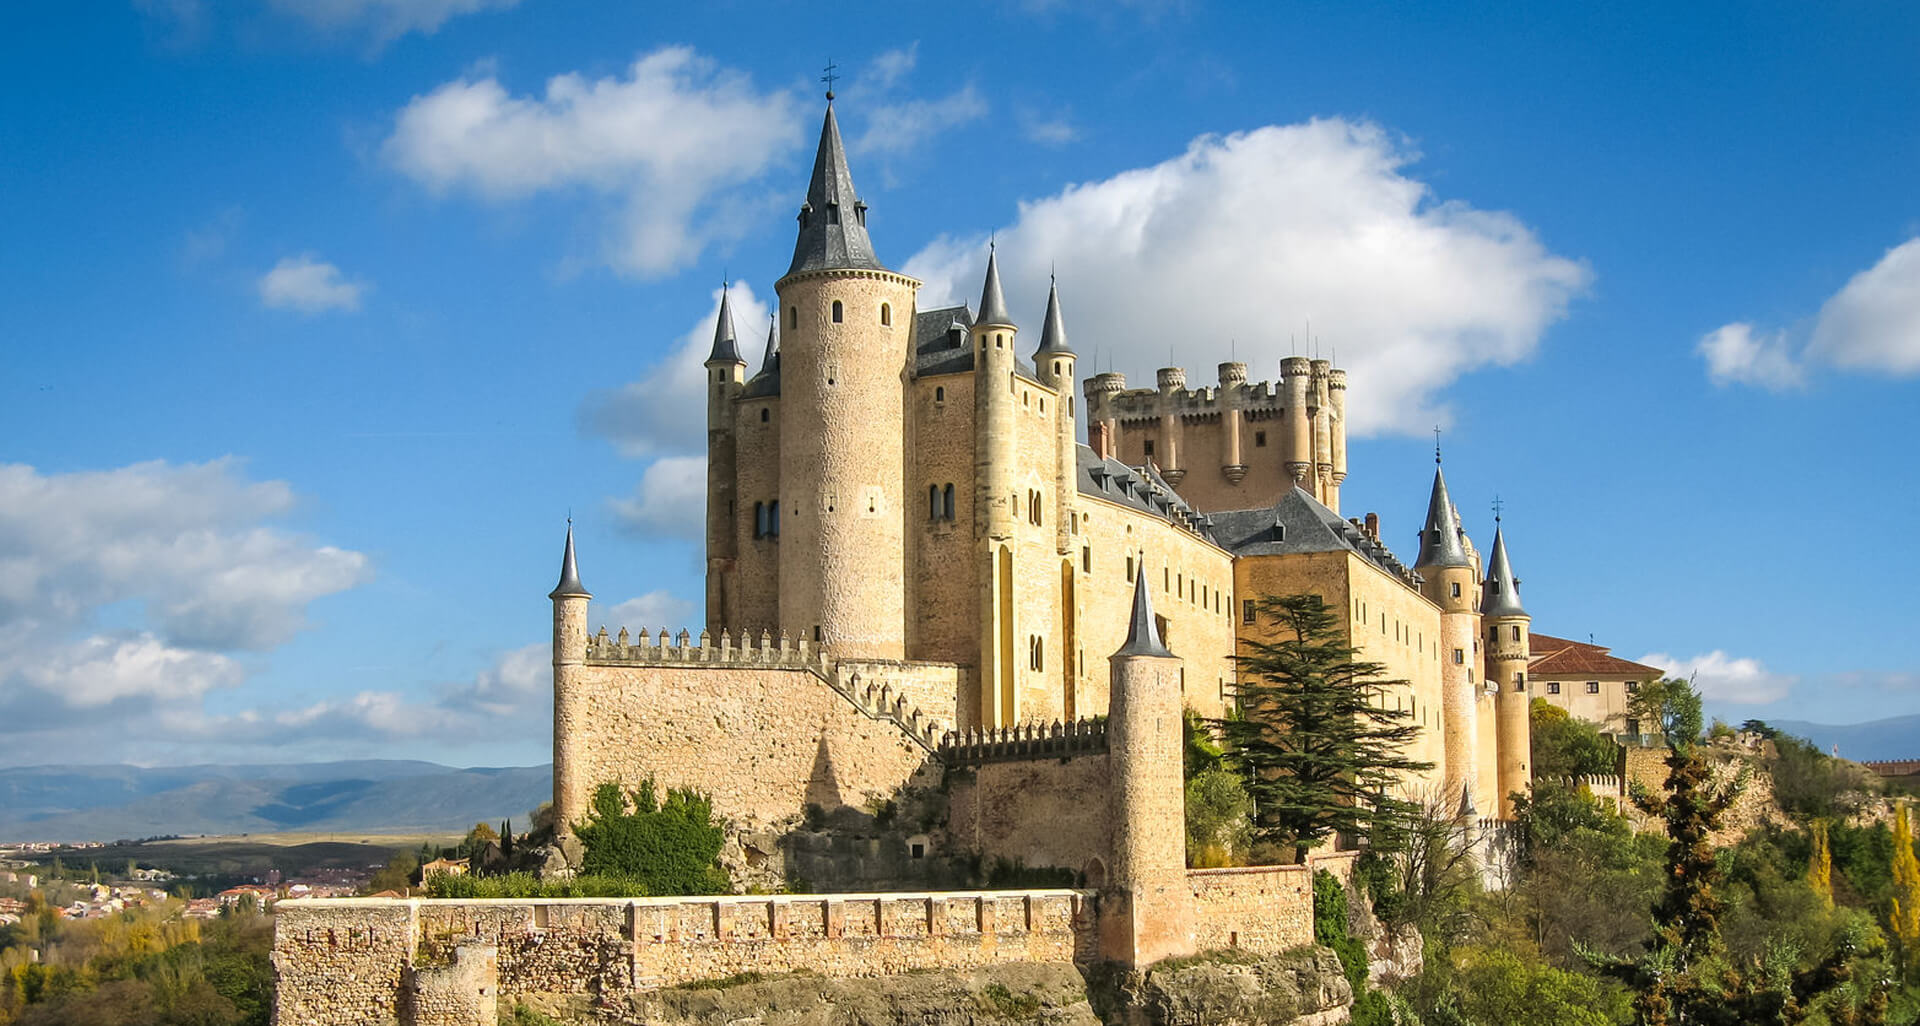 A European castle